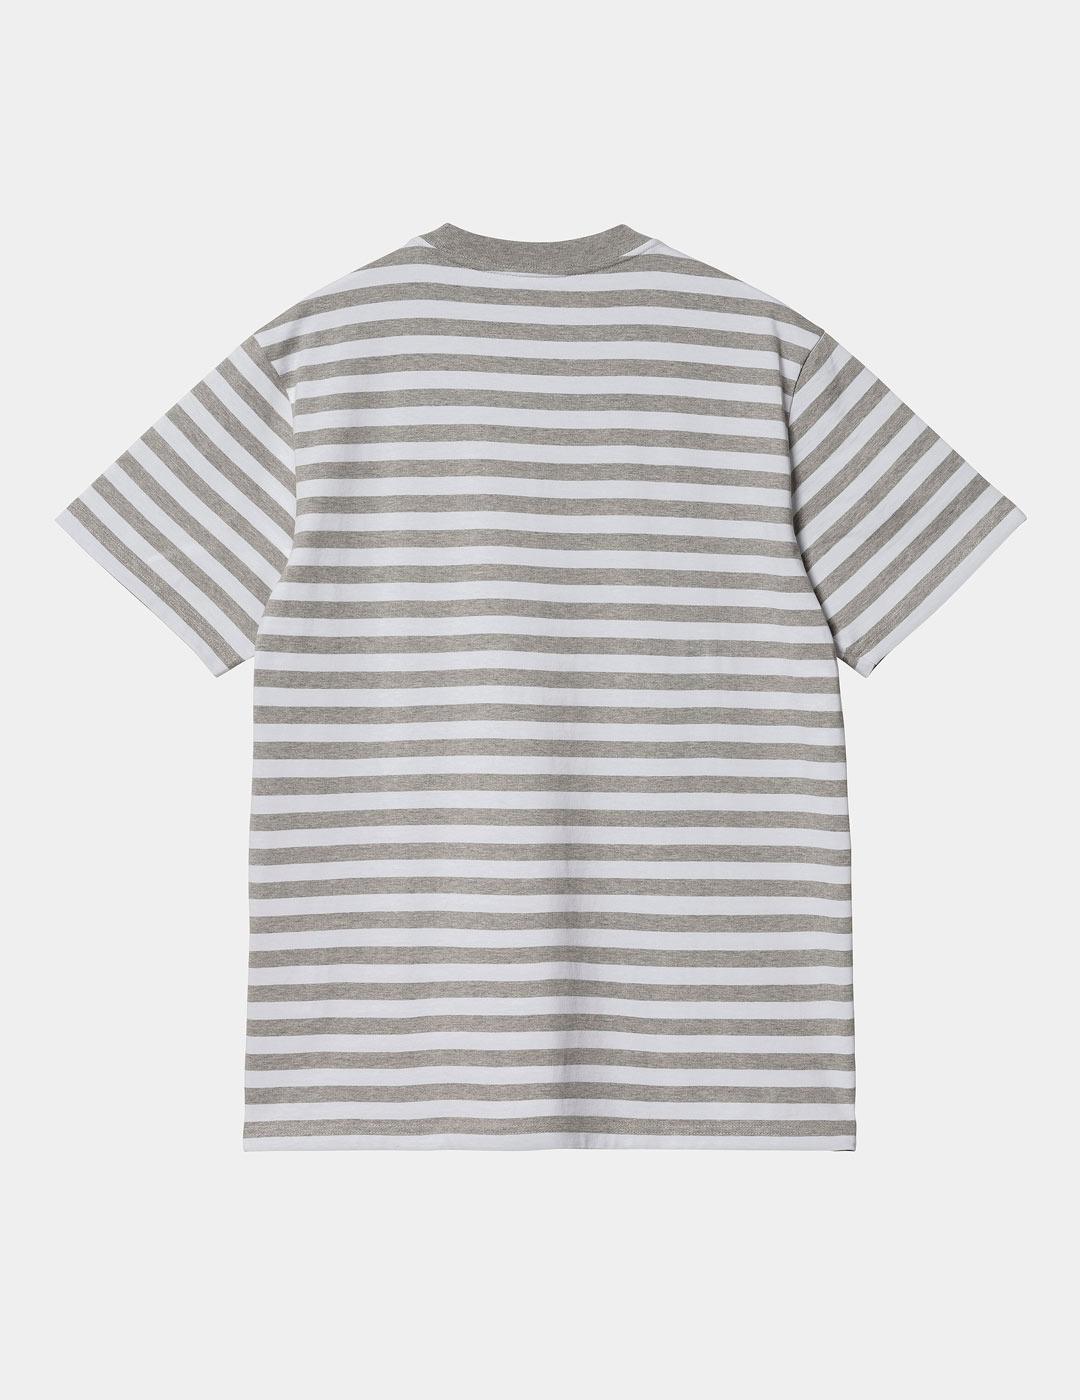 Camiseta CARHARTT SCOTTY POCKET - Grey Heather / White